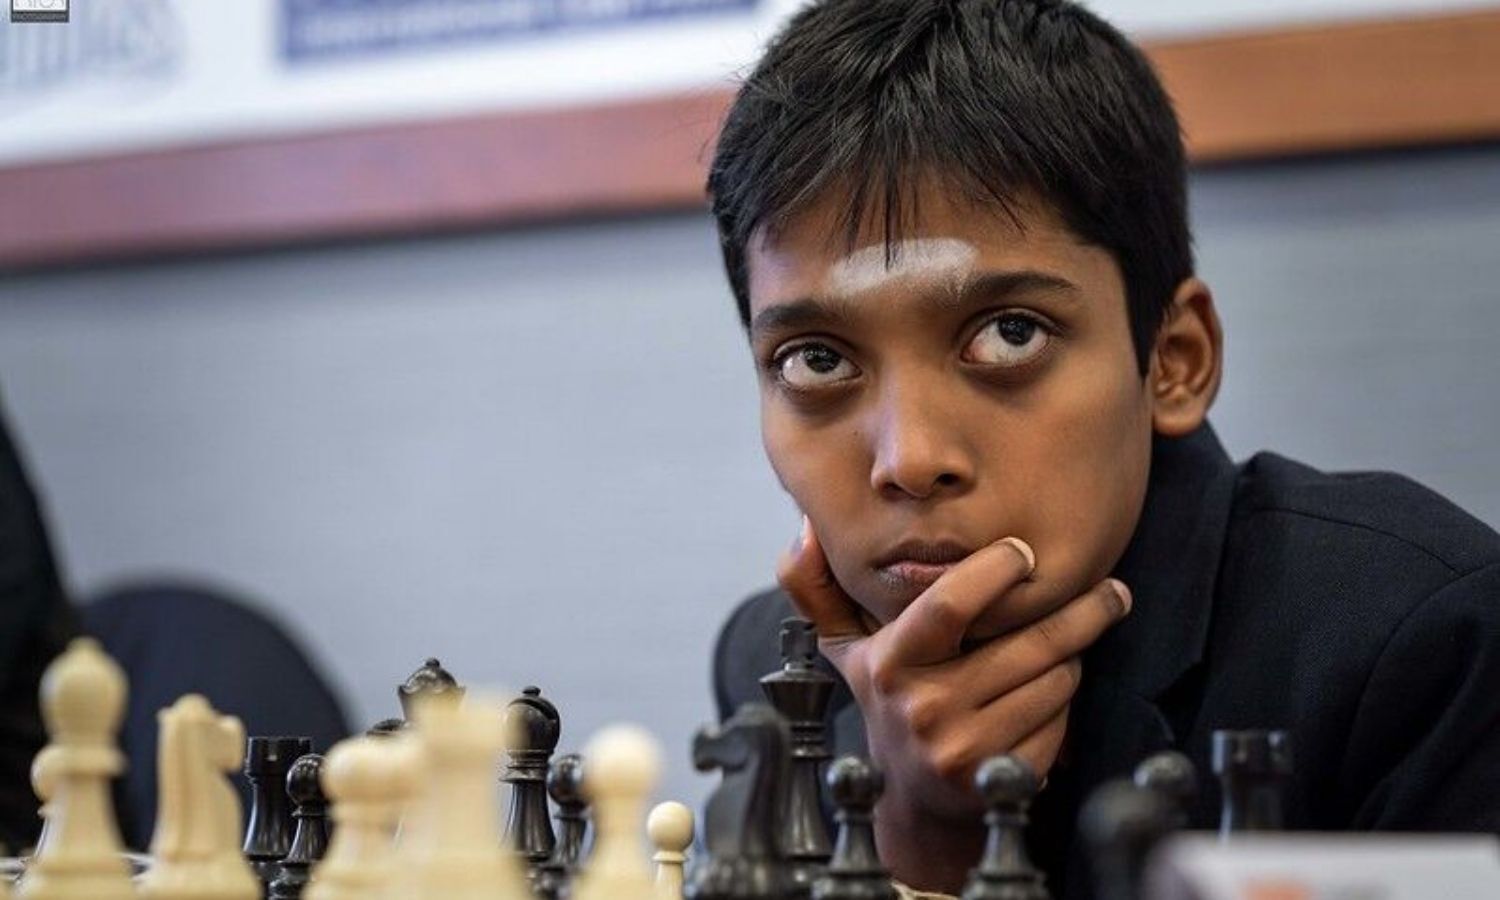 Rameshbabu Praggnanandhaa player profile - ChessBase Players